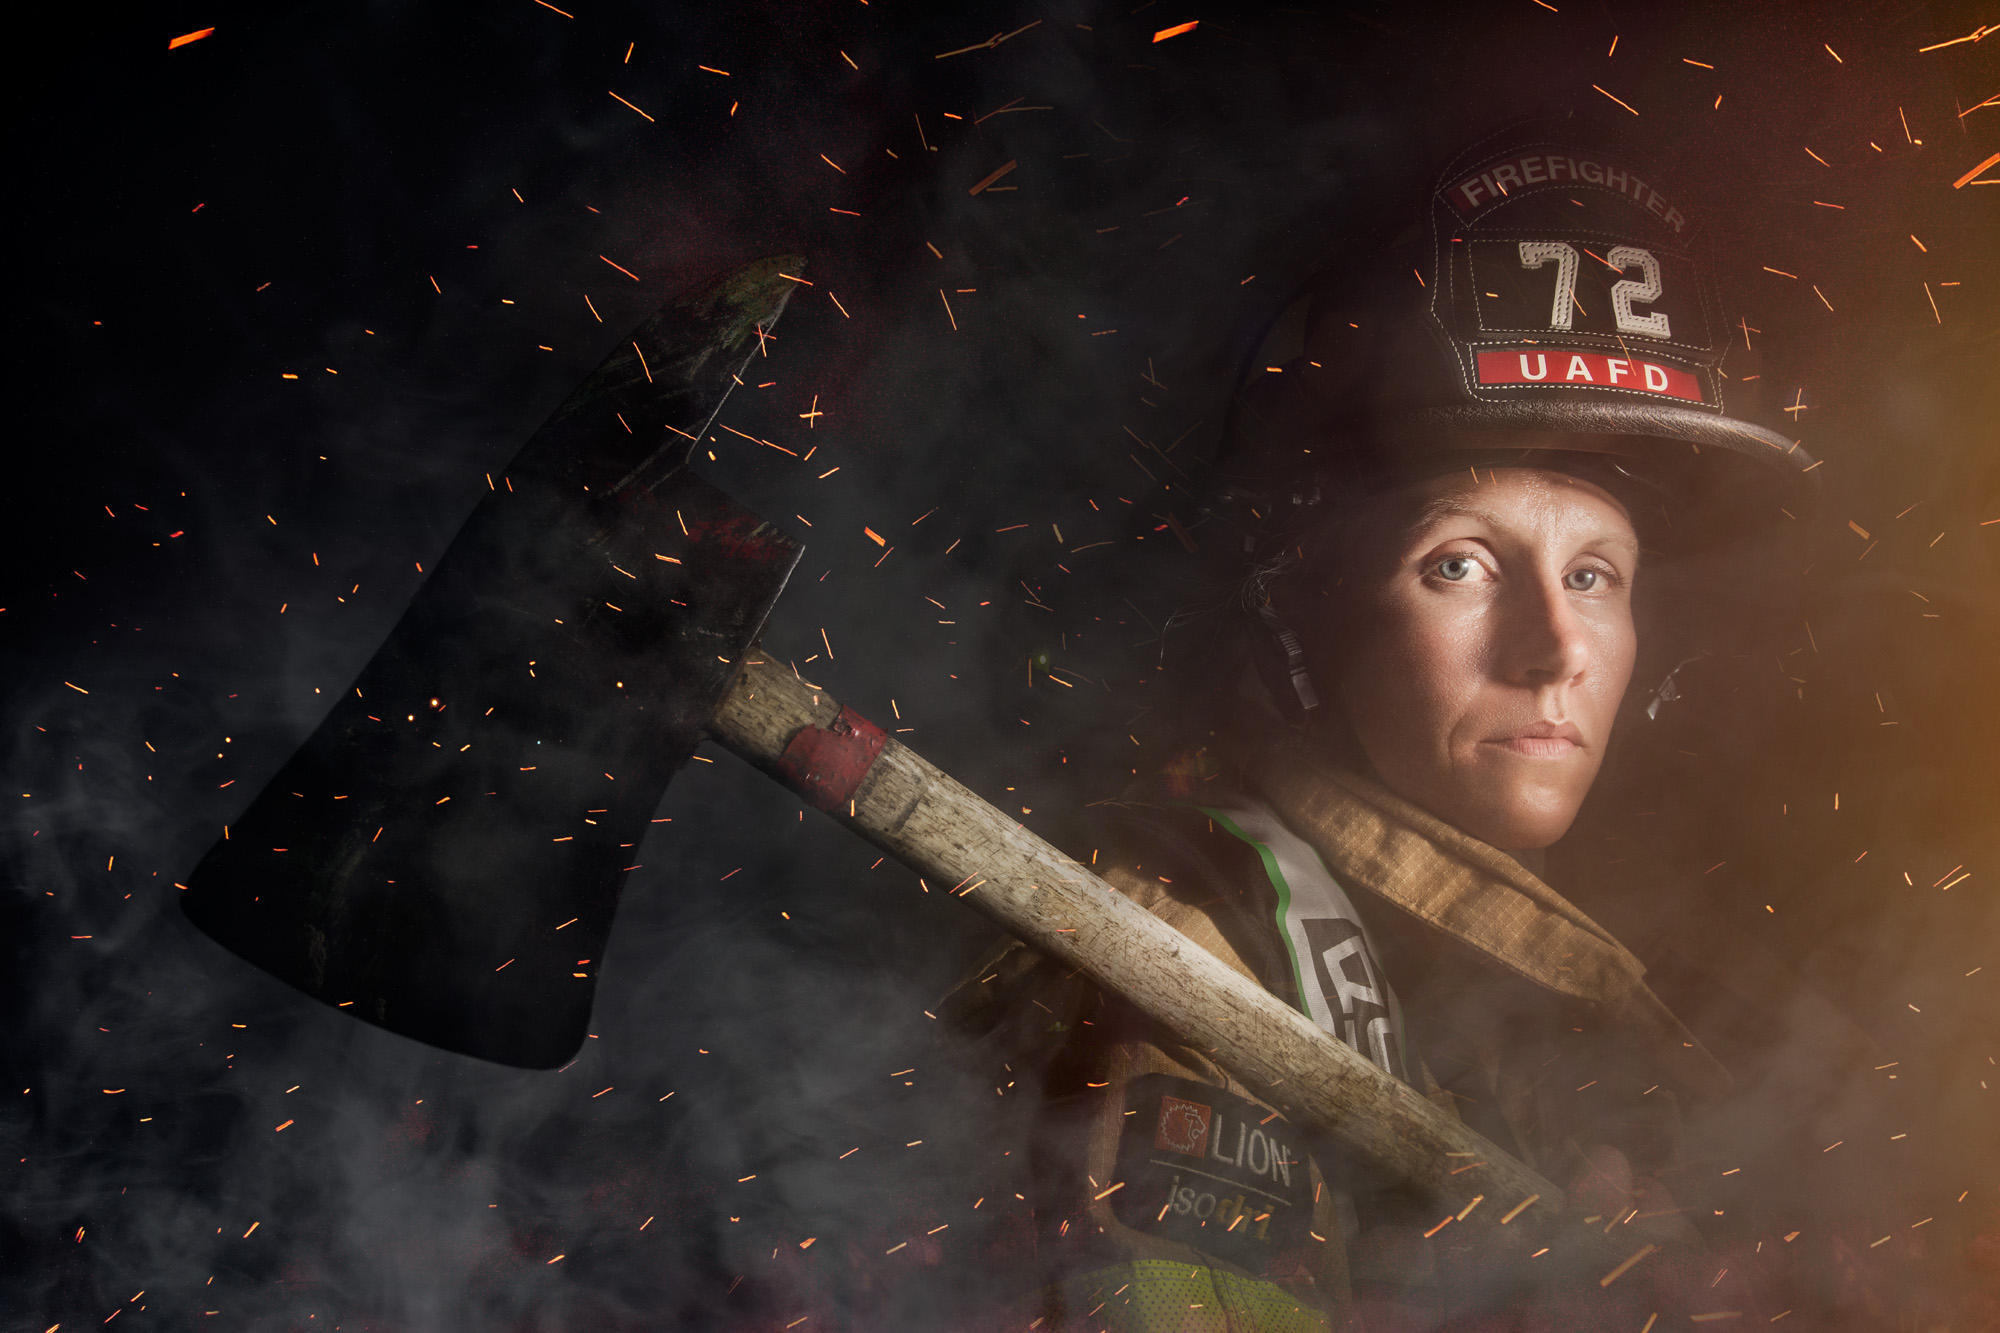 cc2016036 - Mindy Gabriel, firefighter, Upper Arlington, Ohio, for Women